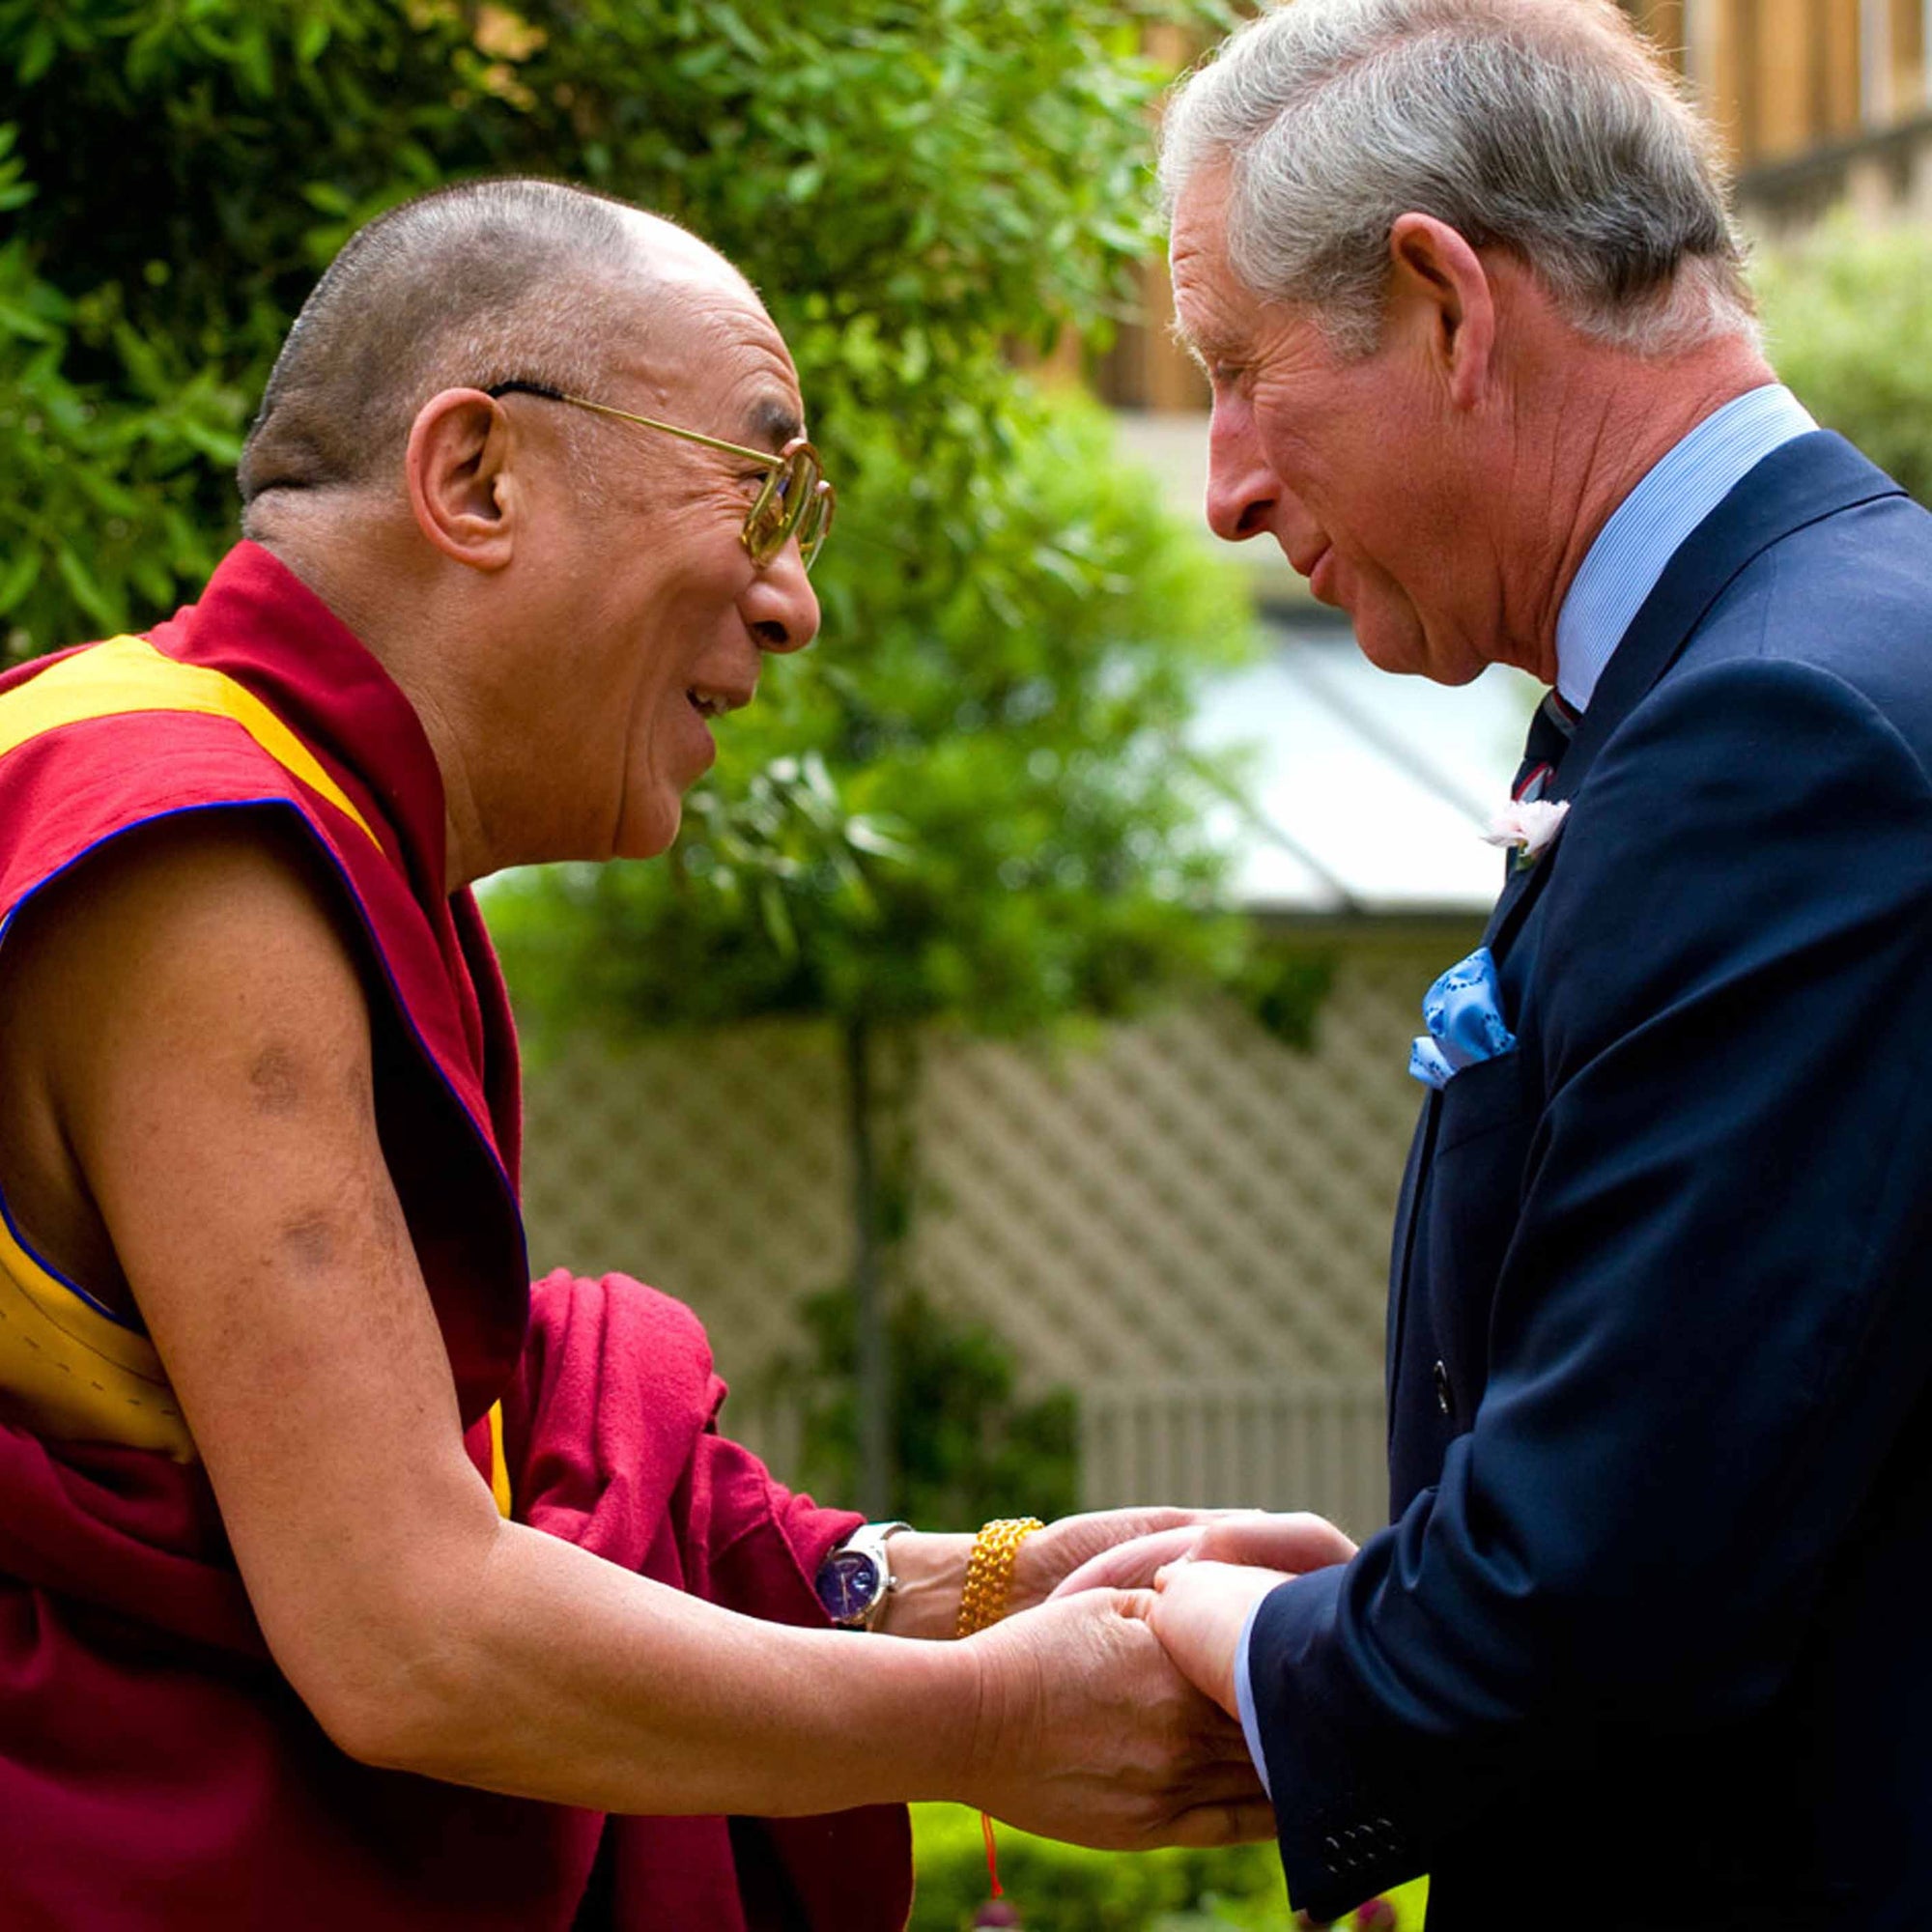 Rolex, Patek Philippe and the Dalai Lama